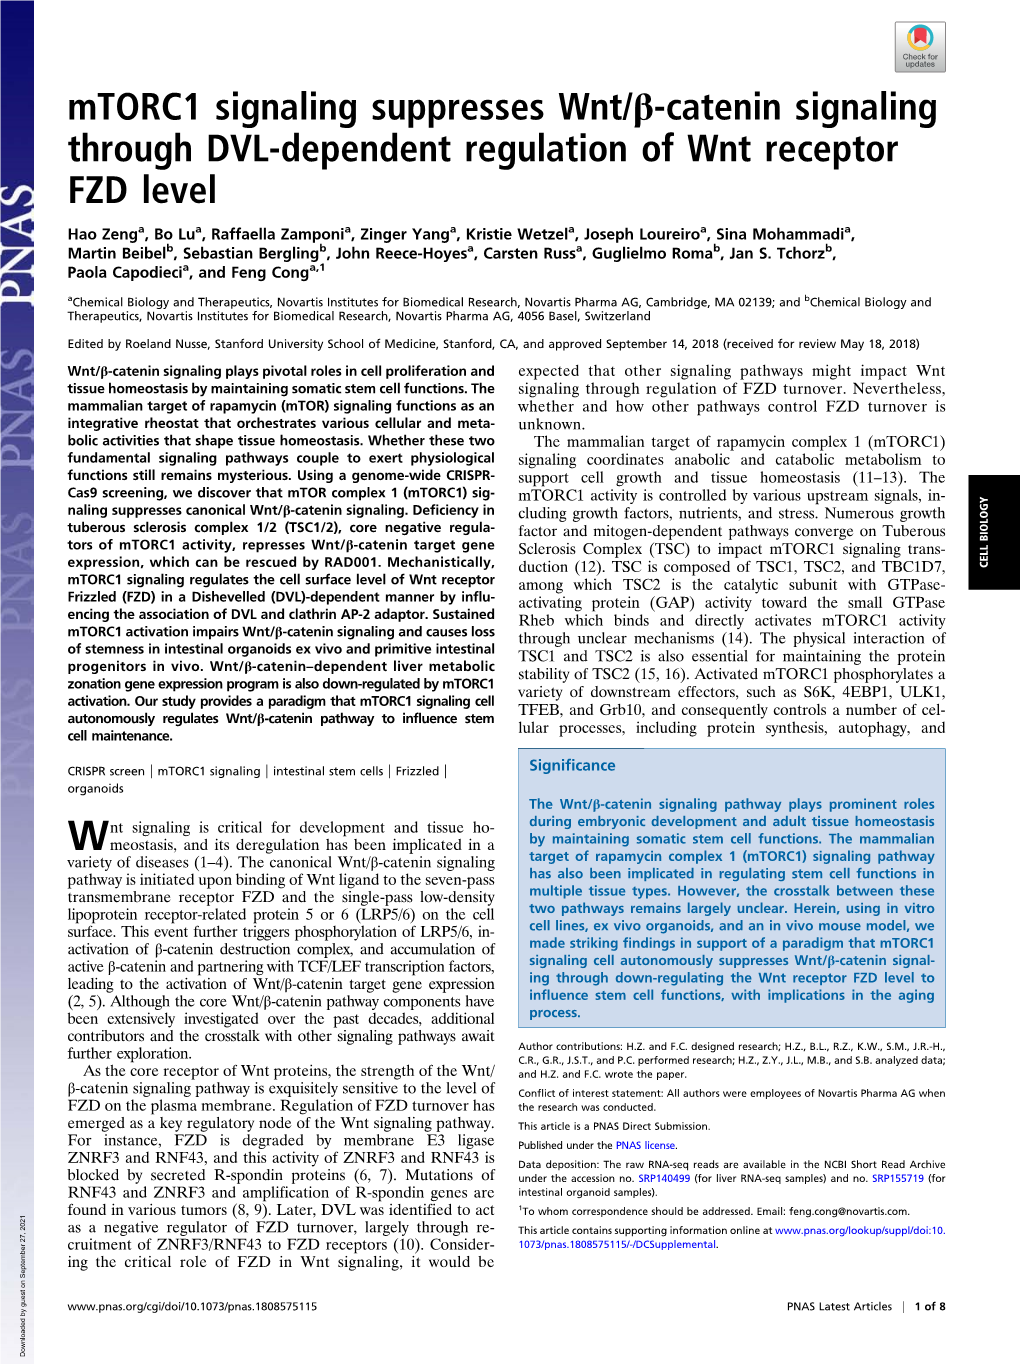 Mtorc1 Signaling Suppresses Wnt/Β-Catenin Signaling Through DVL-Dependent Regulation of Wnt Receptor FZD Level